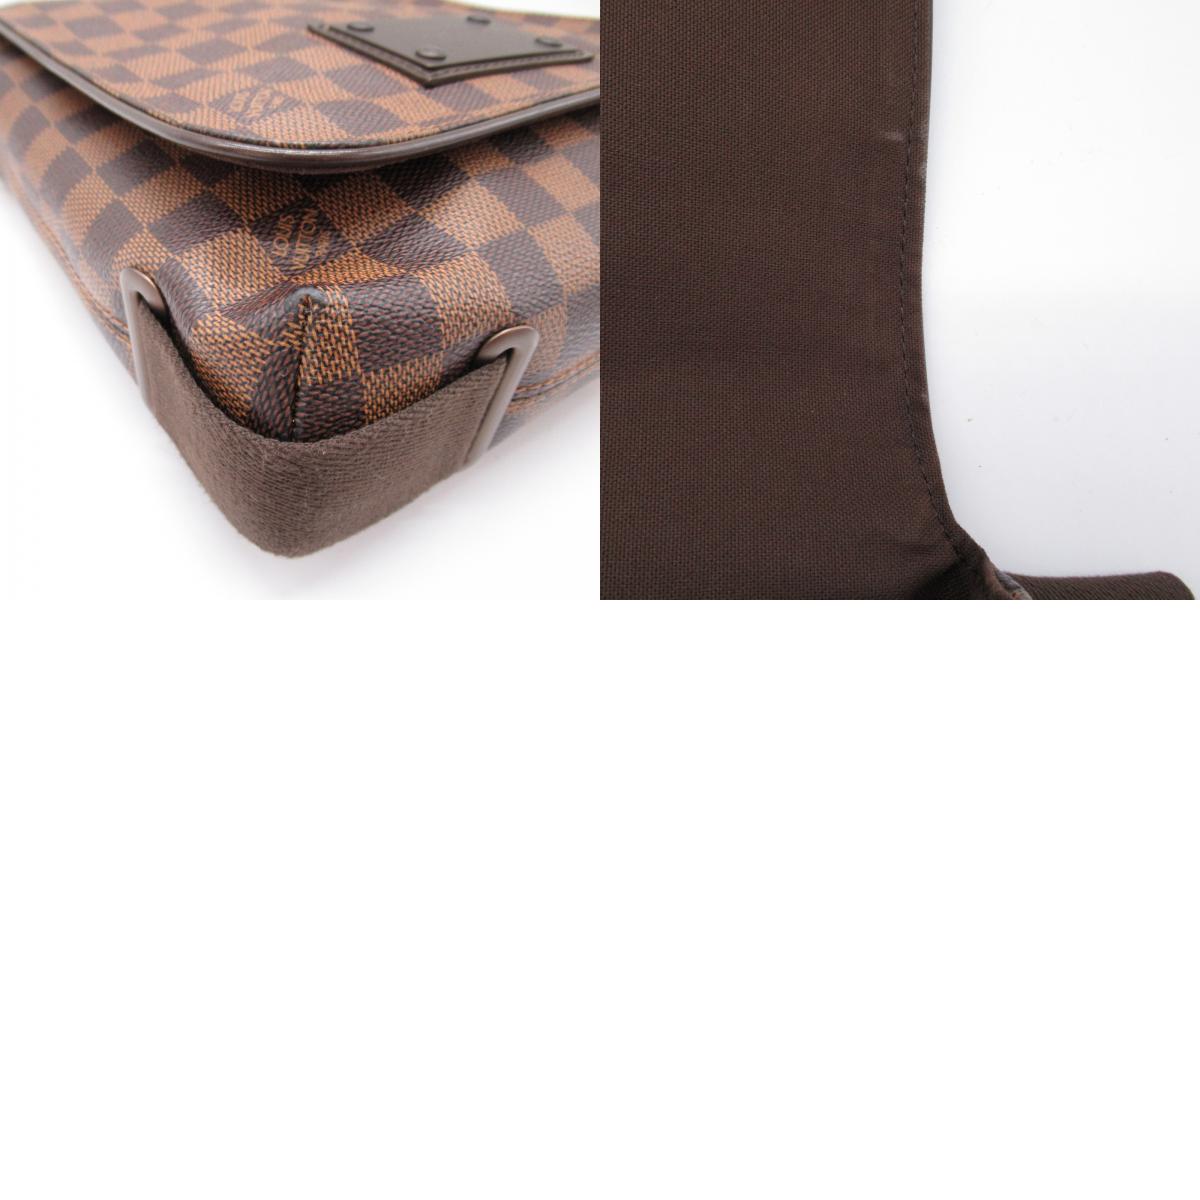 Louis Vuitton Brooklyn Messenger Bag PVC Coated Linen Damiens  Brown  N51210